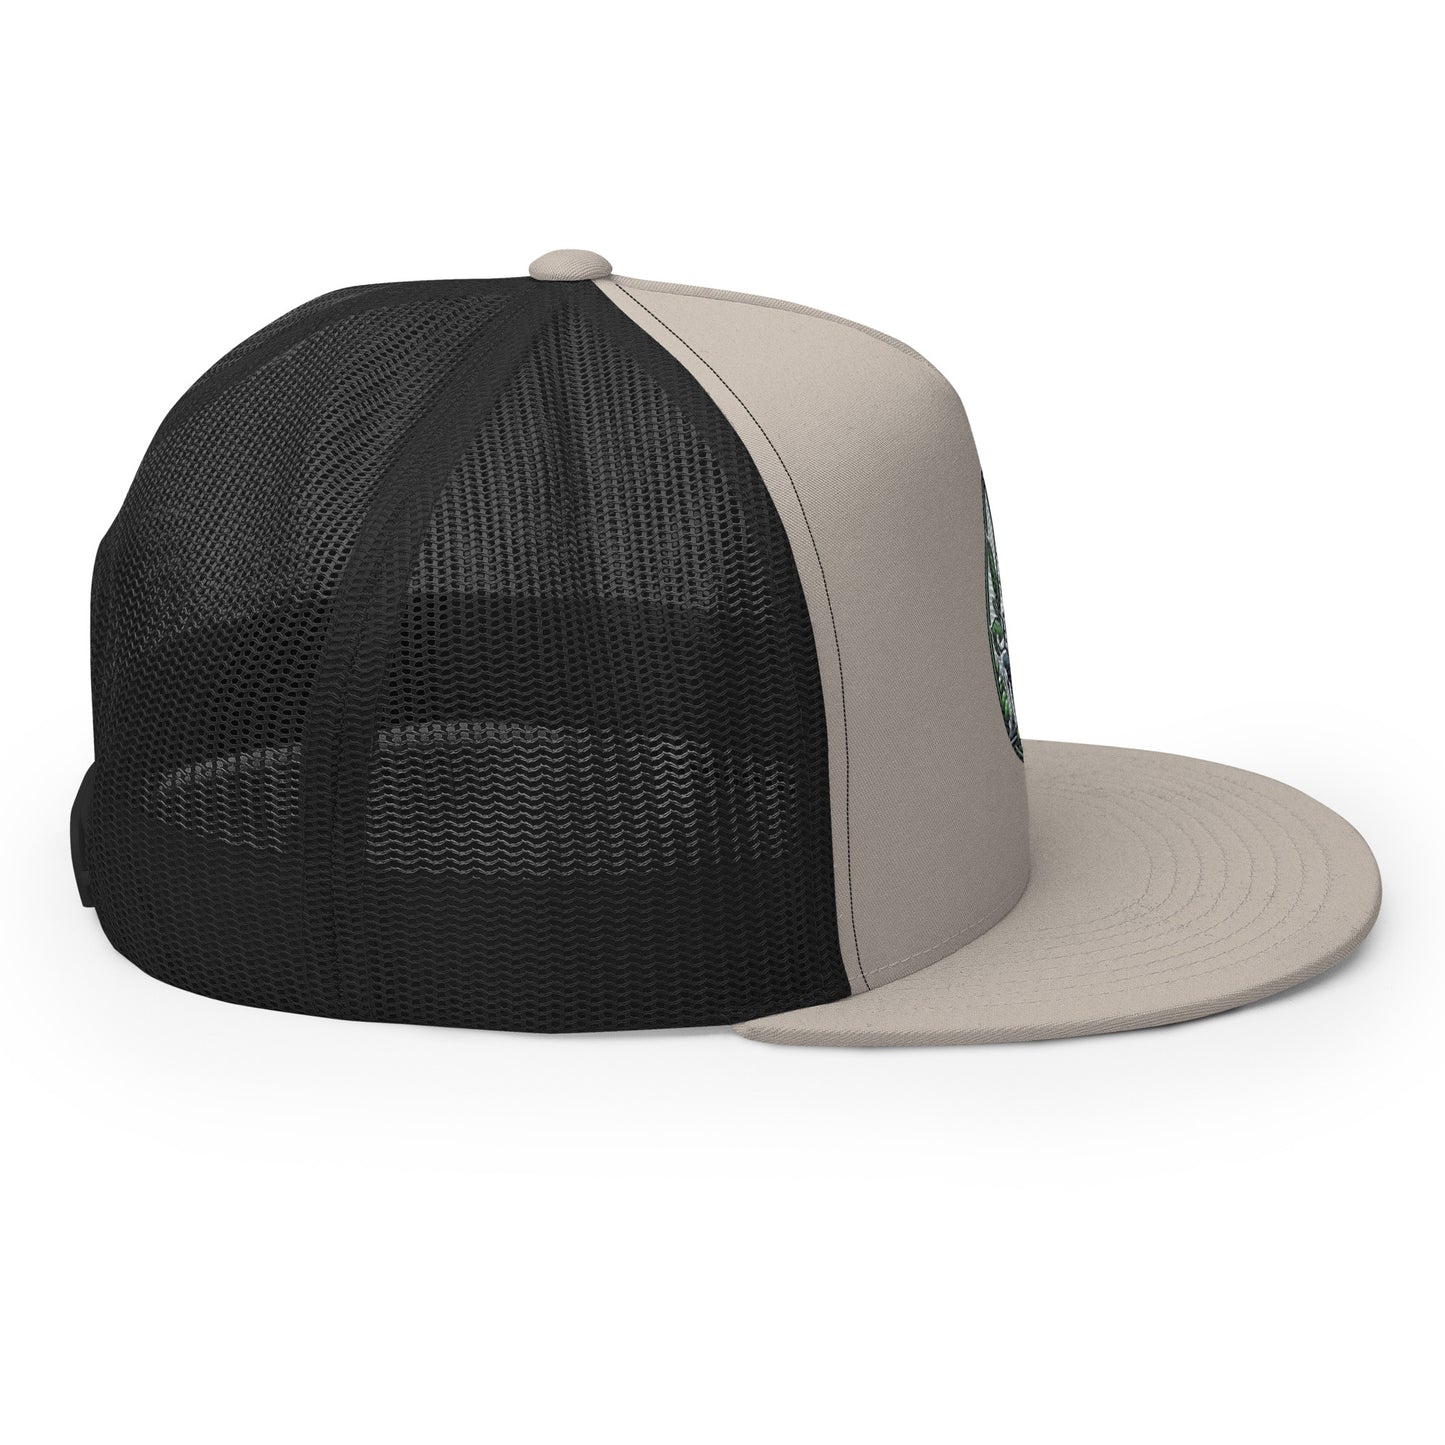 Vibrant Visions - Organic Health & Wellness - Classic Hat, Trucker Cap, Snap back hat